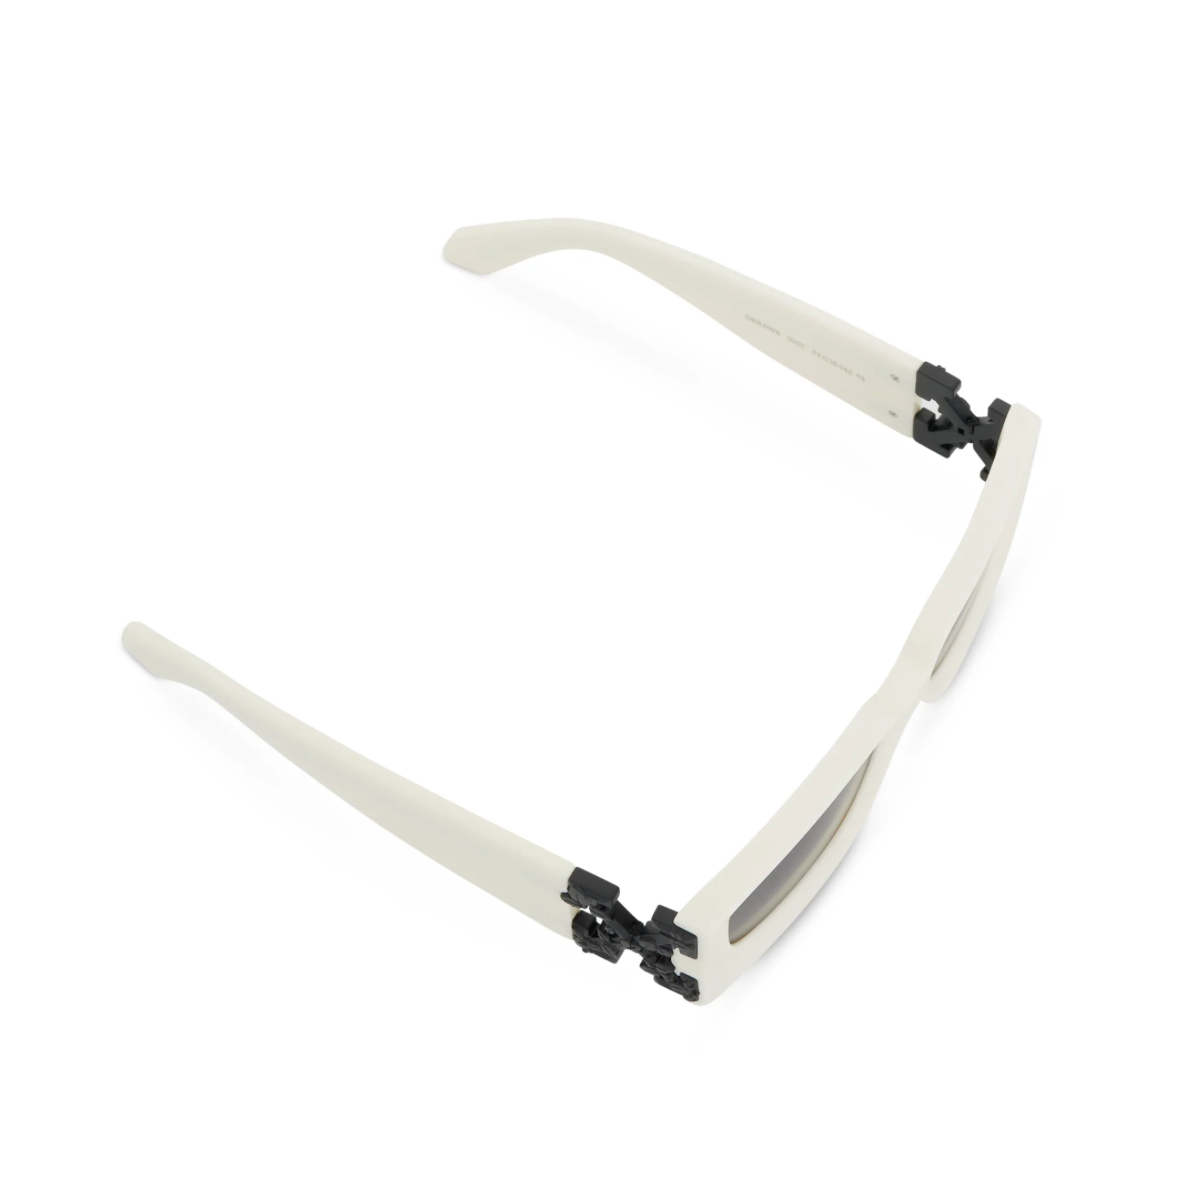 Off-White ROMA WHITE DARK GREY 52mm New Sunglasses